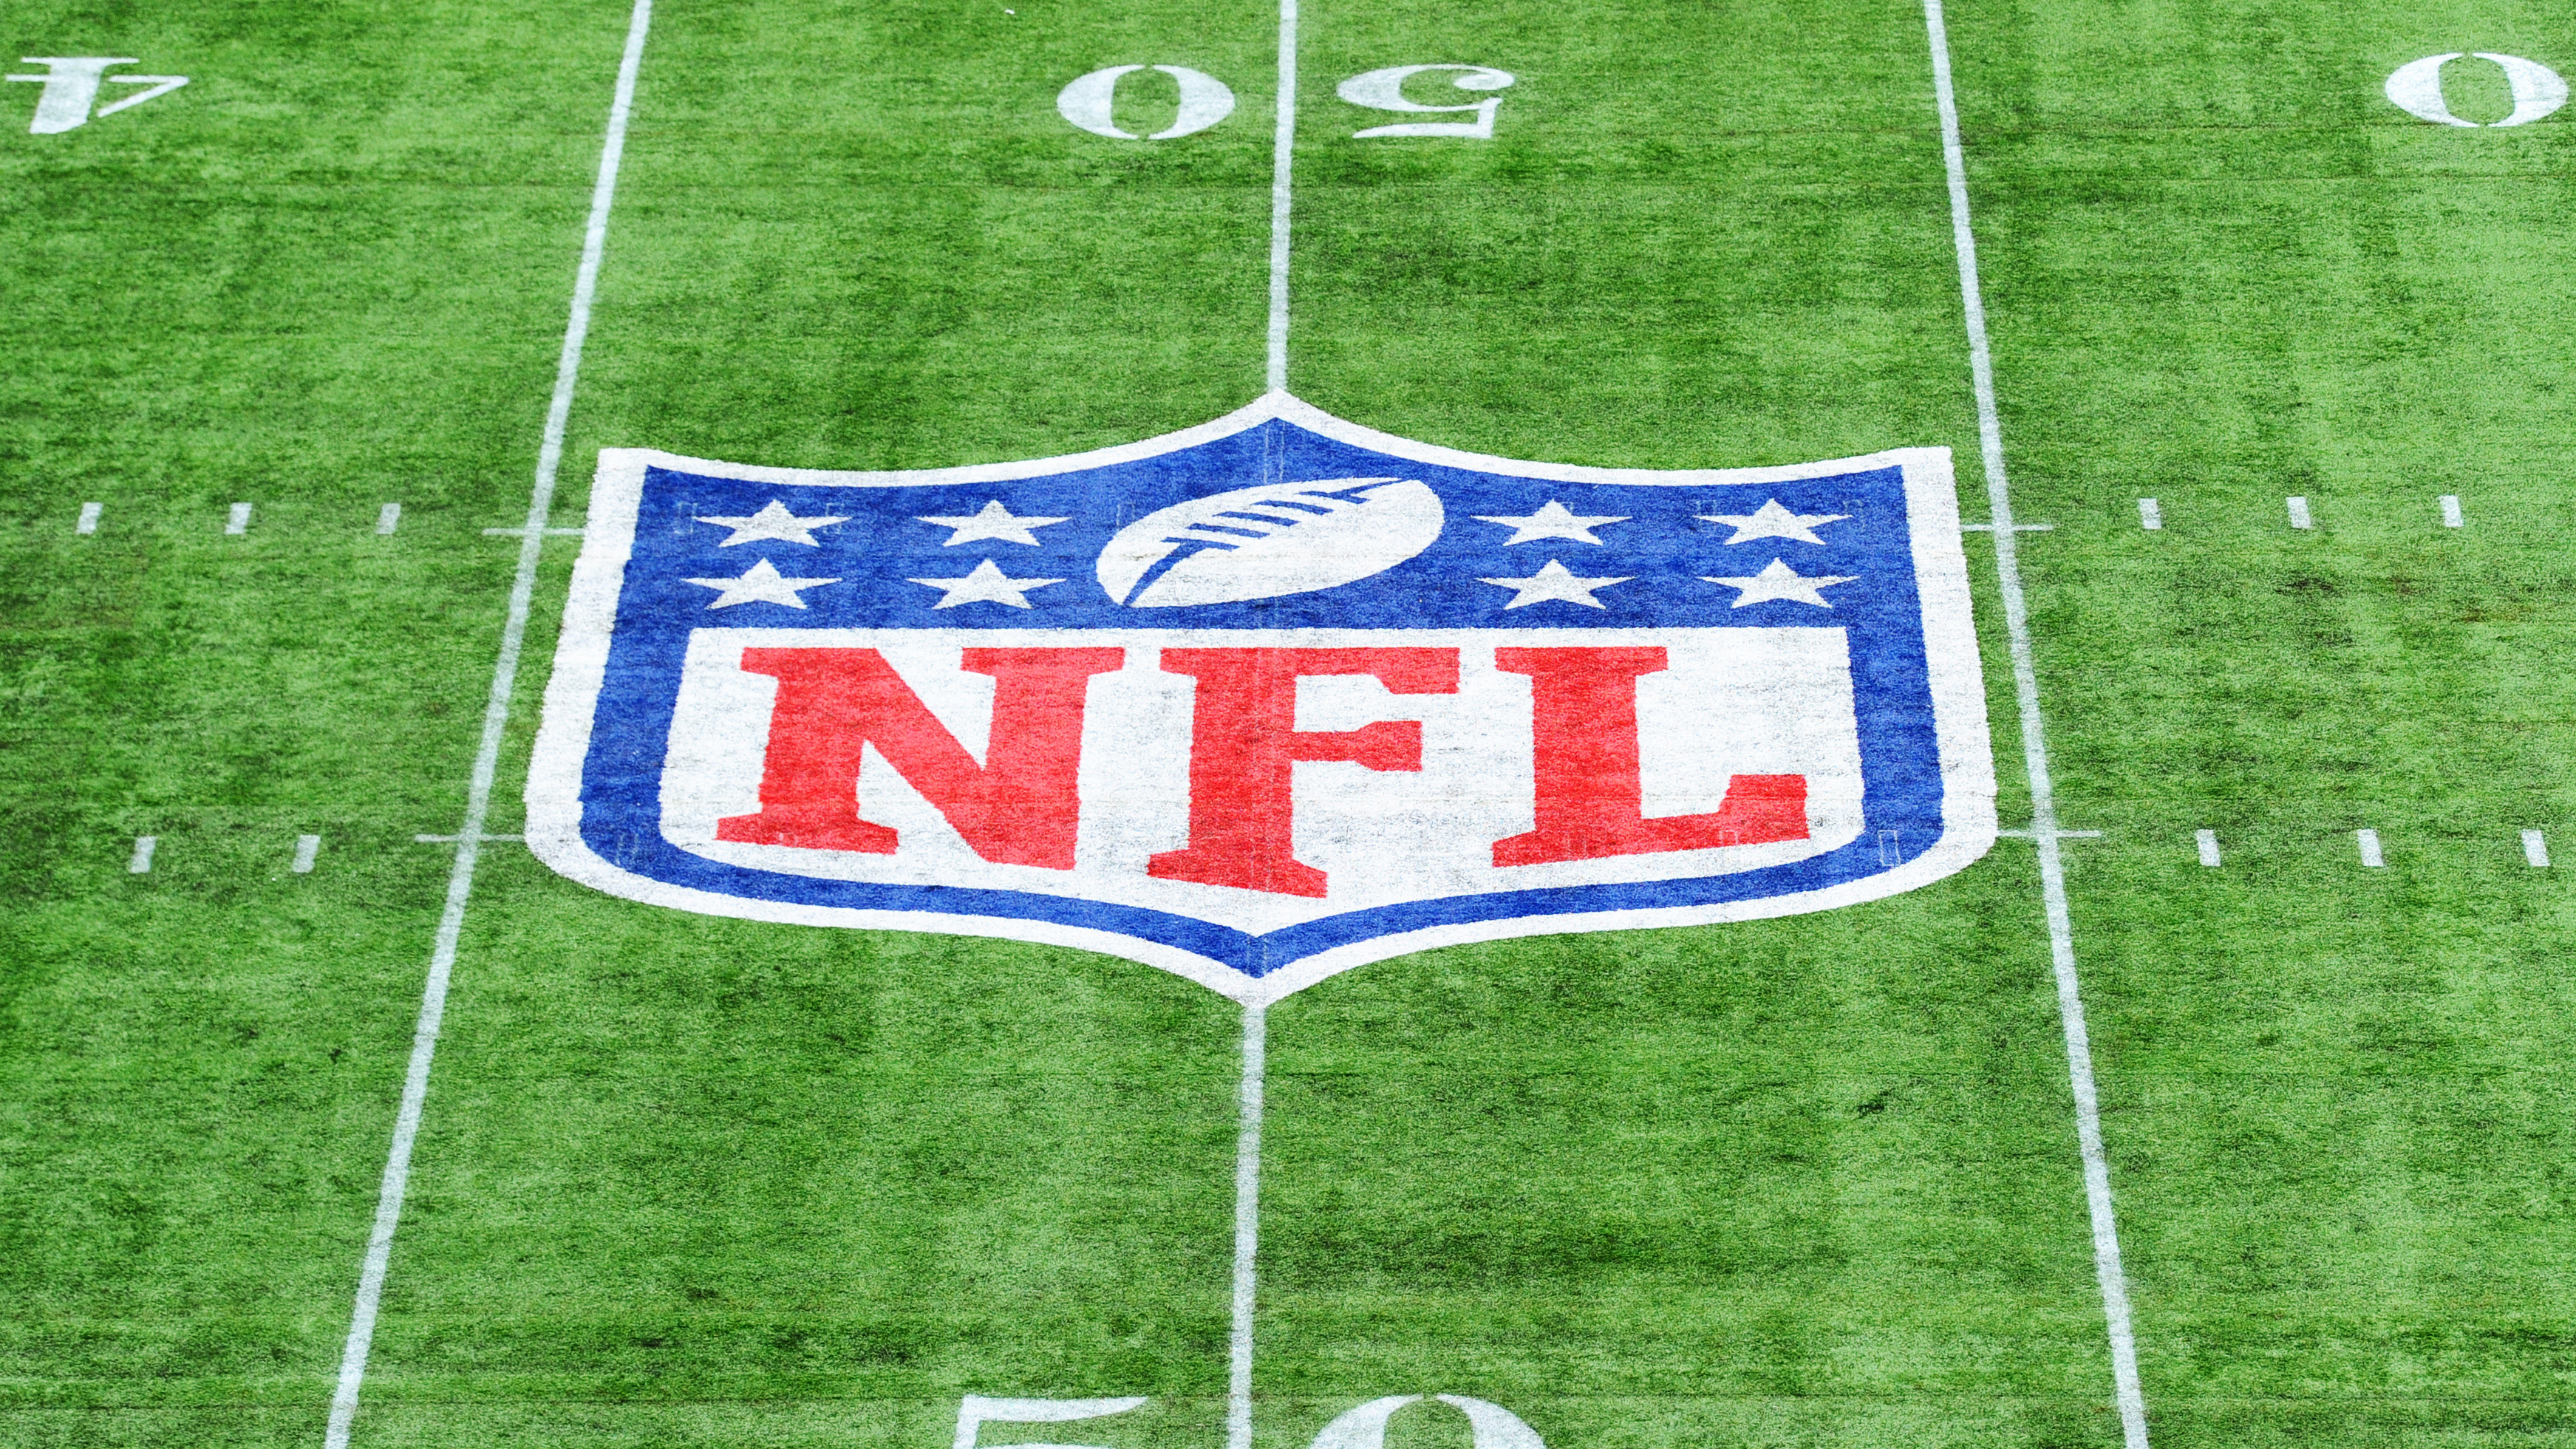 2020 NFL Season predictions: Super Bowl winner, playoff teams, MVP | RSN